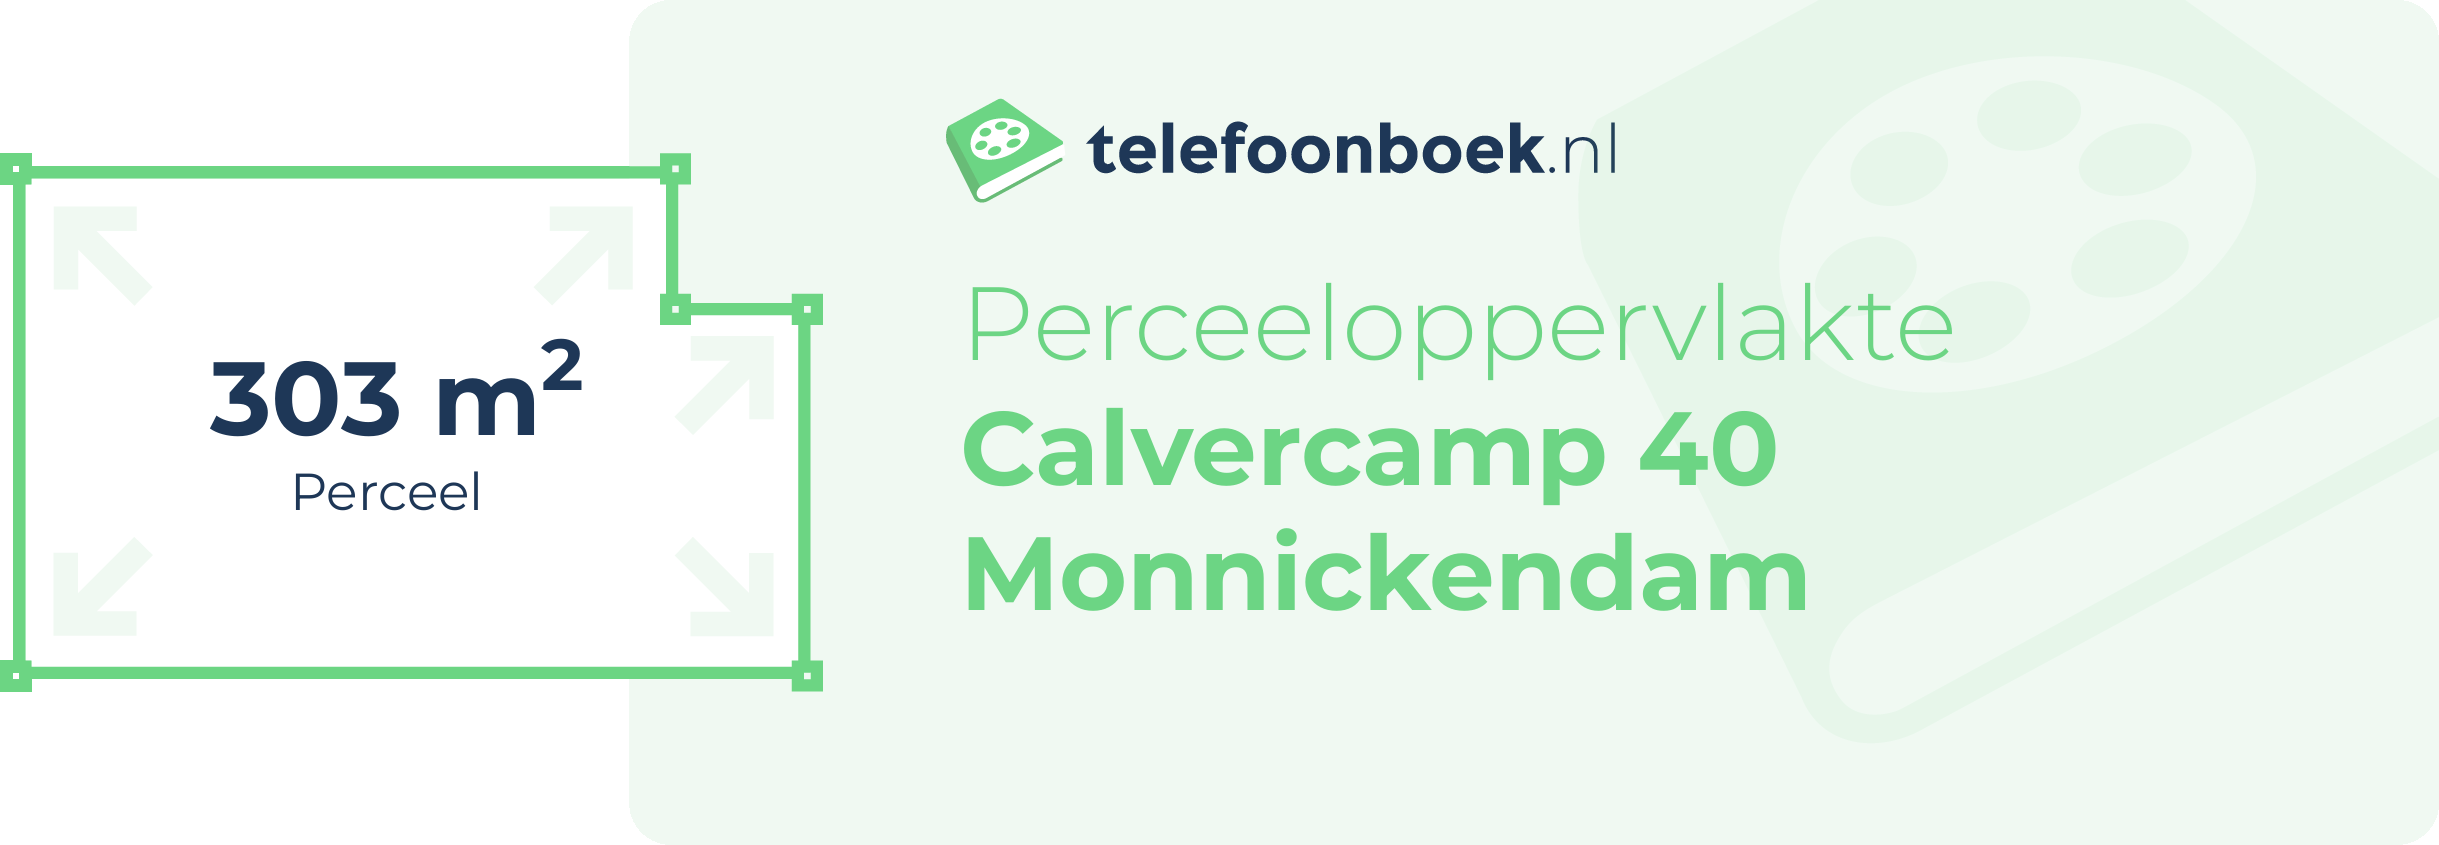 Perceeloppervlakte Calvercamp 40 Monnickendam